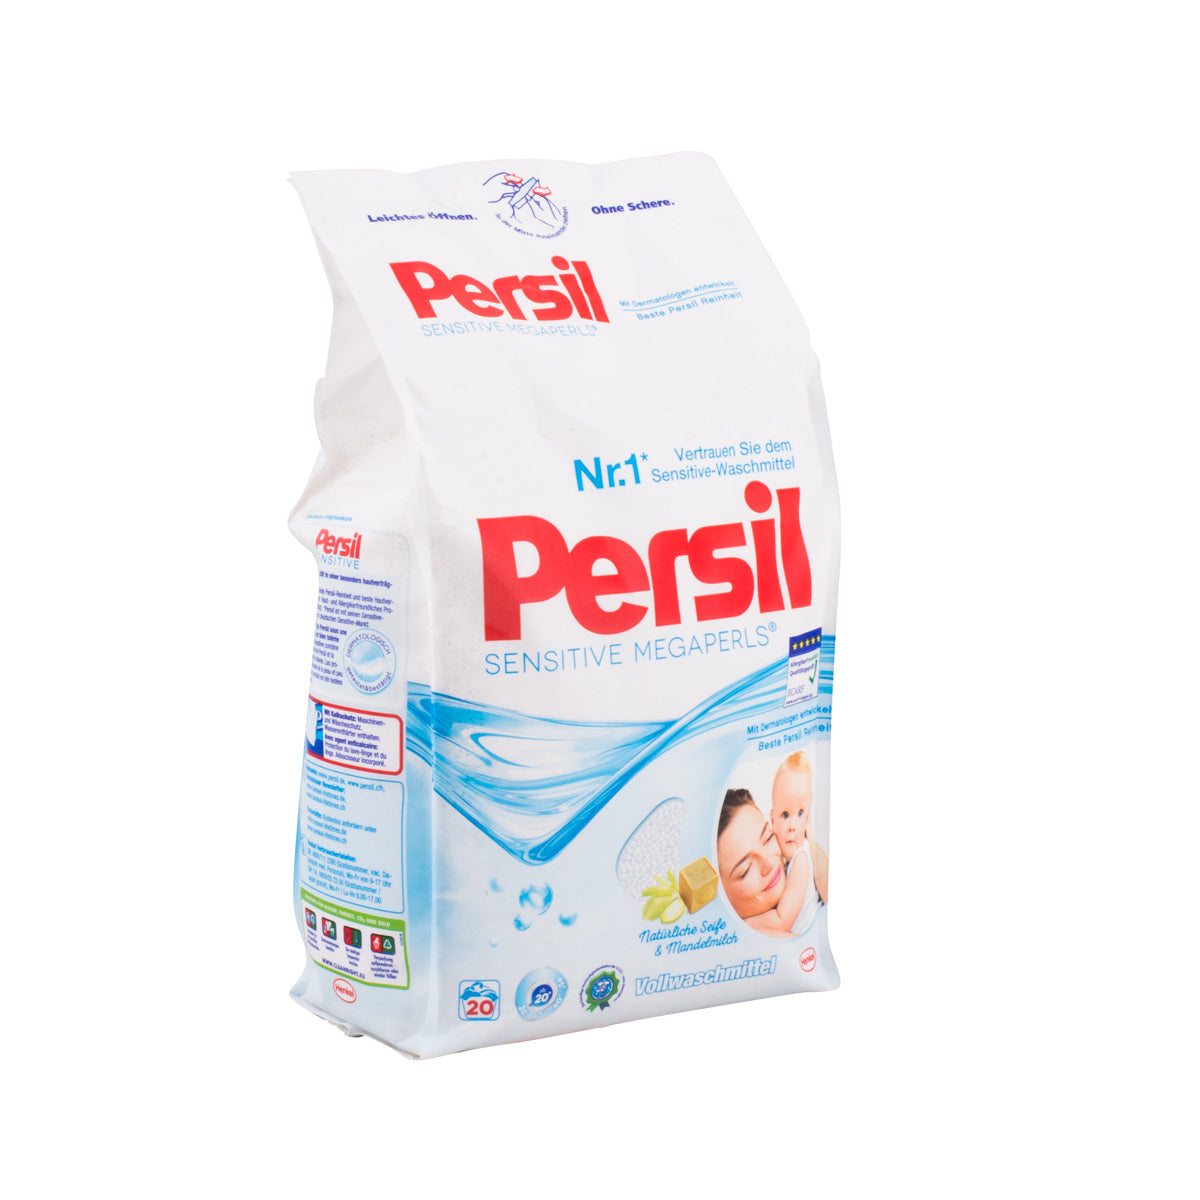 Persil Sensitive Megapearls HE Laundry Detergent 1.33kg